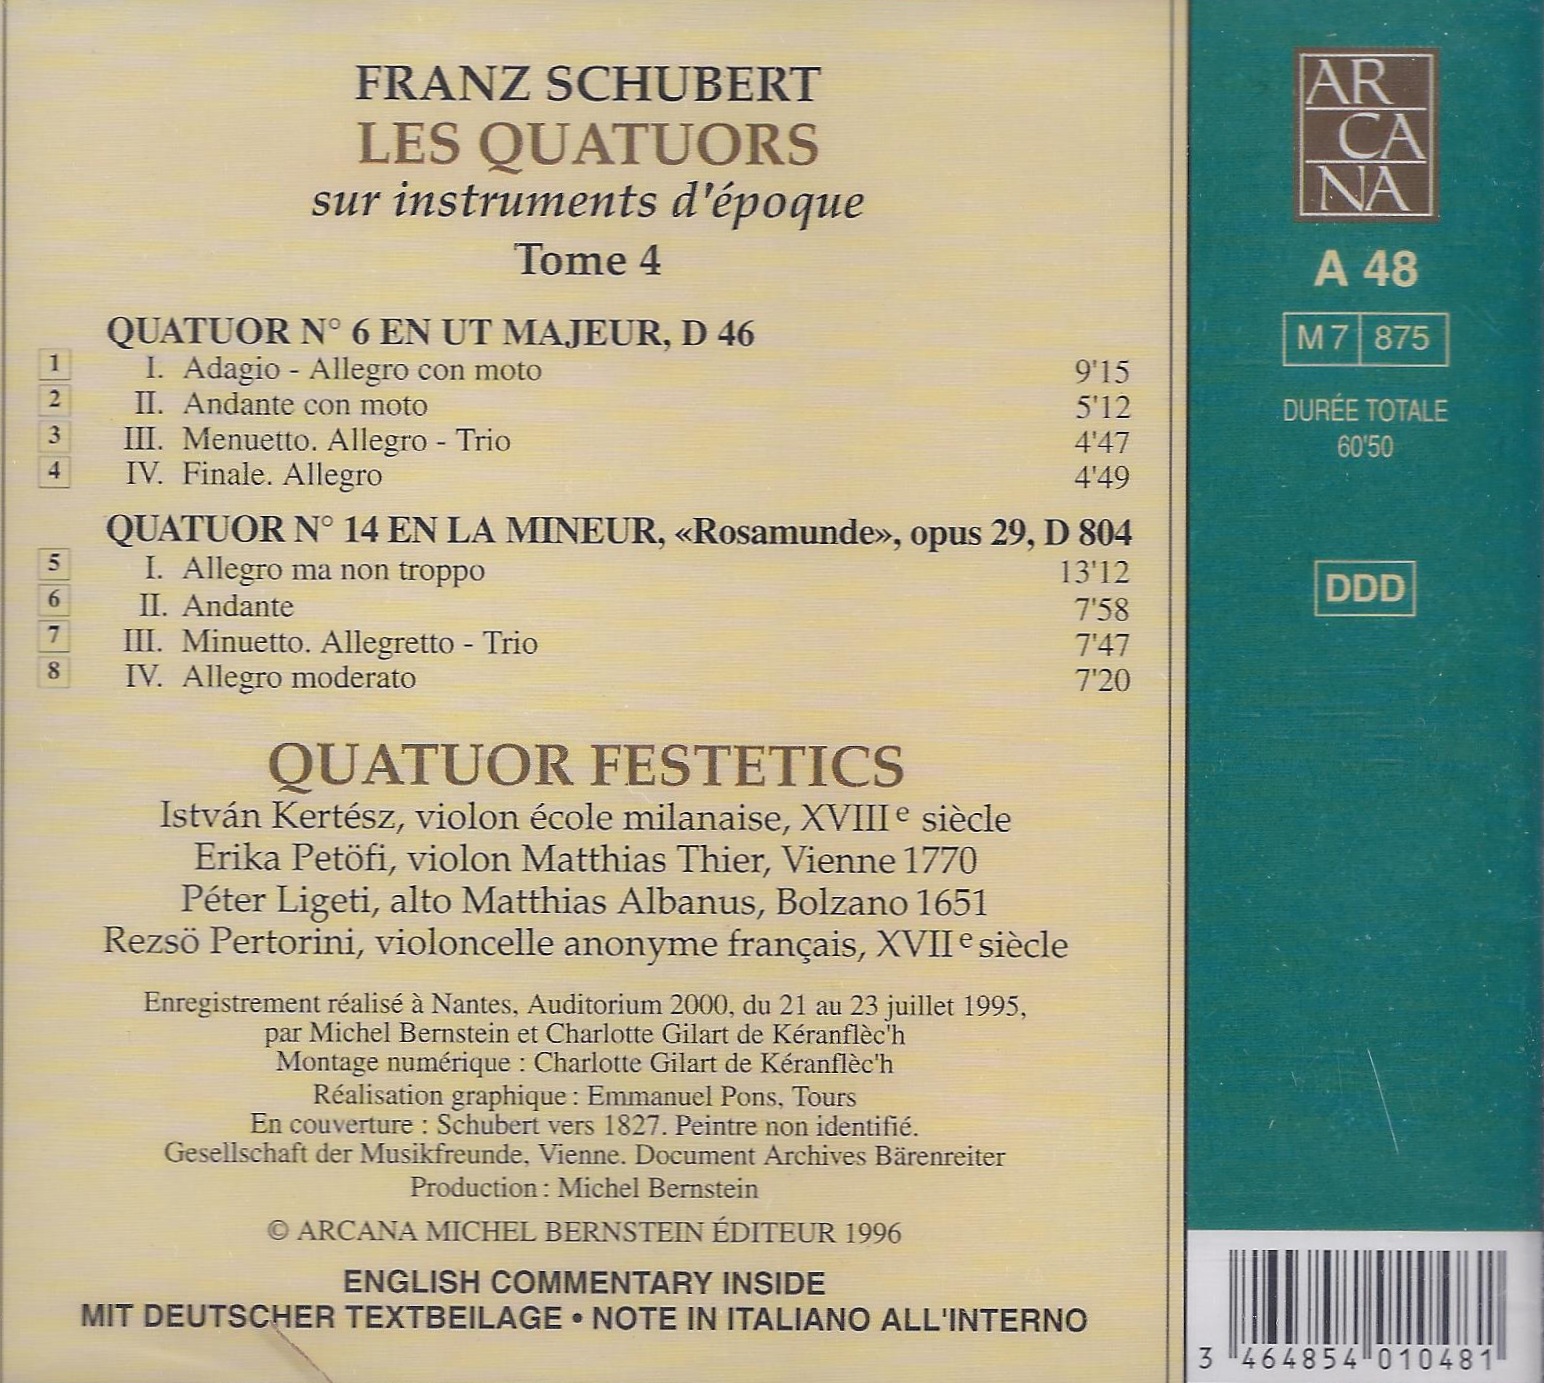 Schubert: String Quartets Vol 4 (D46, D804 Rosamunde) - slide-1